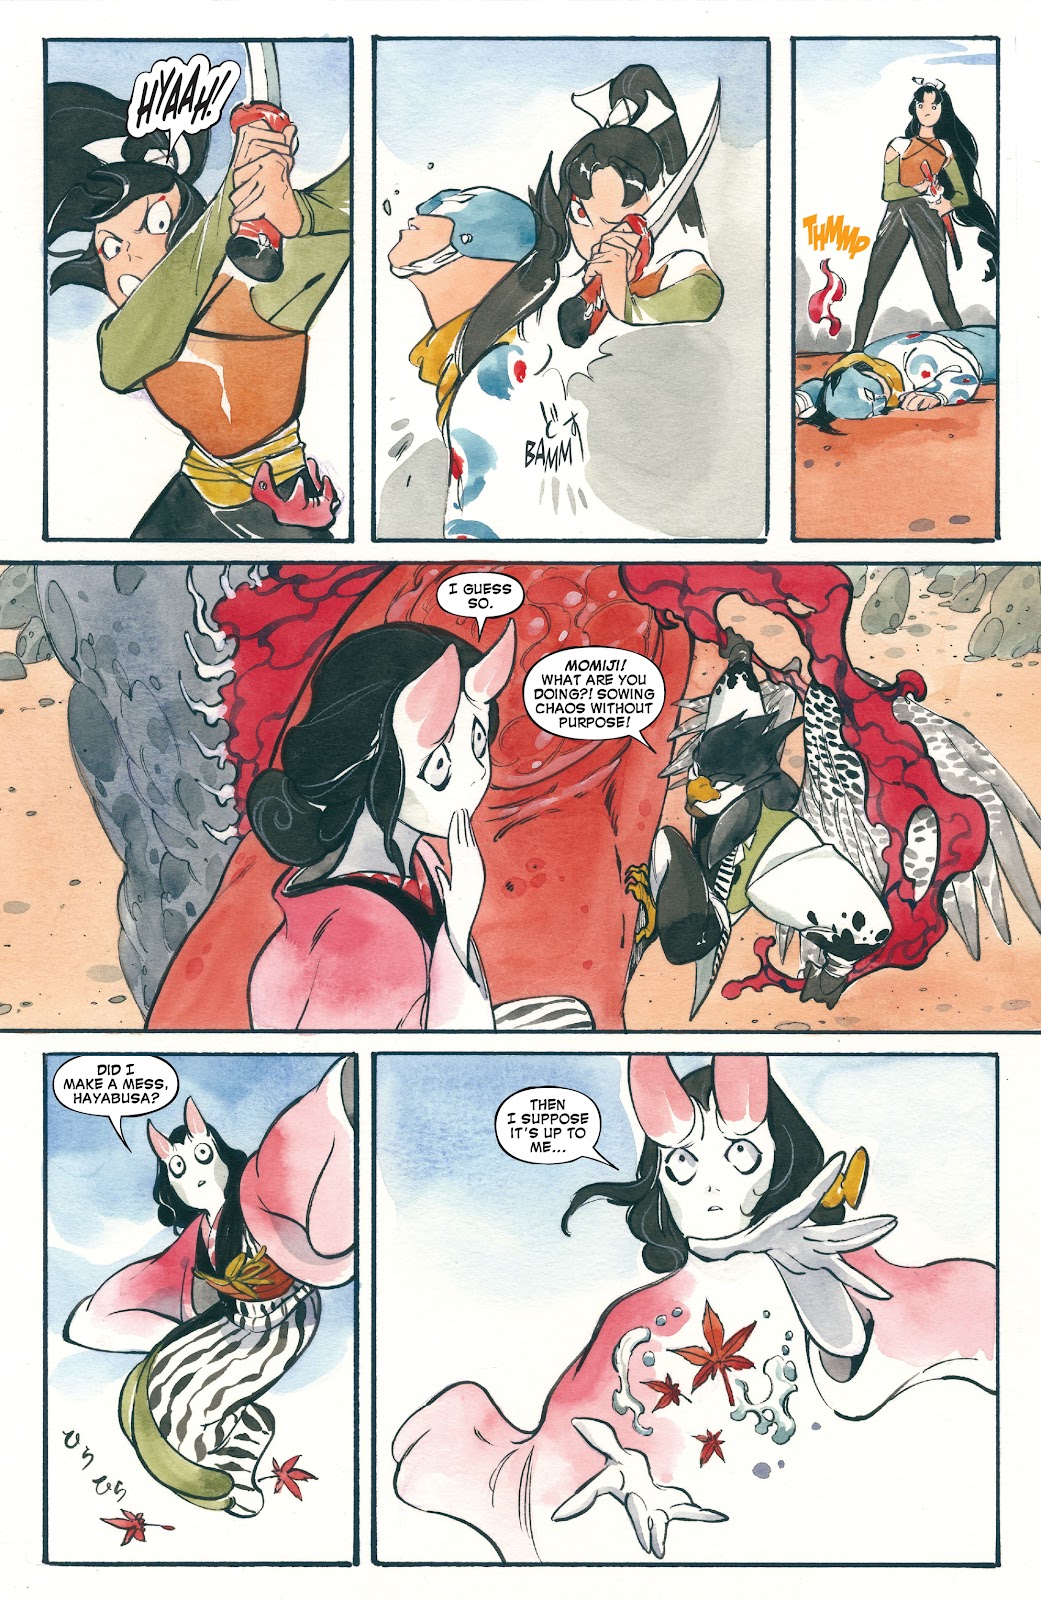 Demon Wars: Scarlet Sin issue 1 - Page 9